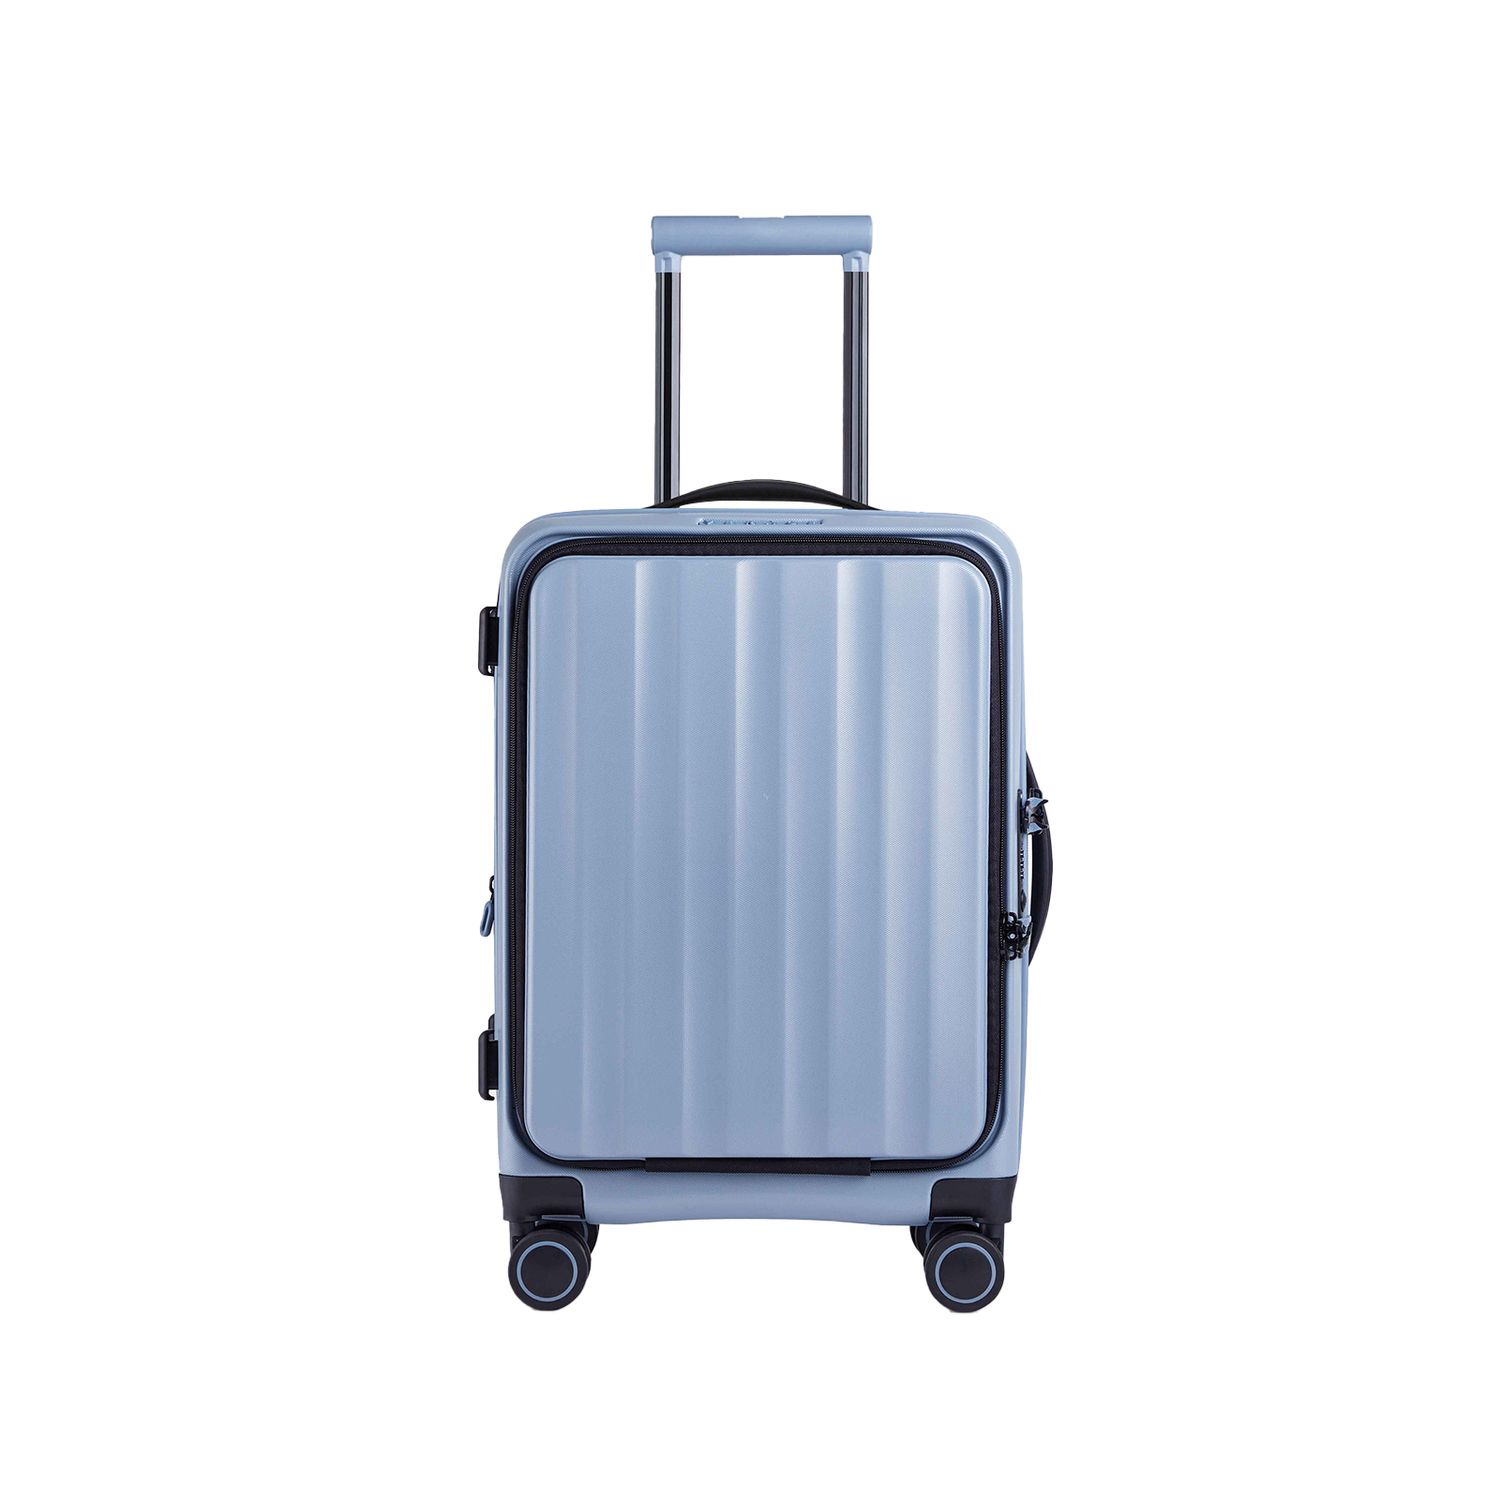 Light blue hard shell suitcase